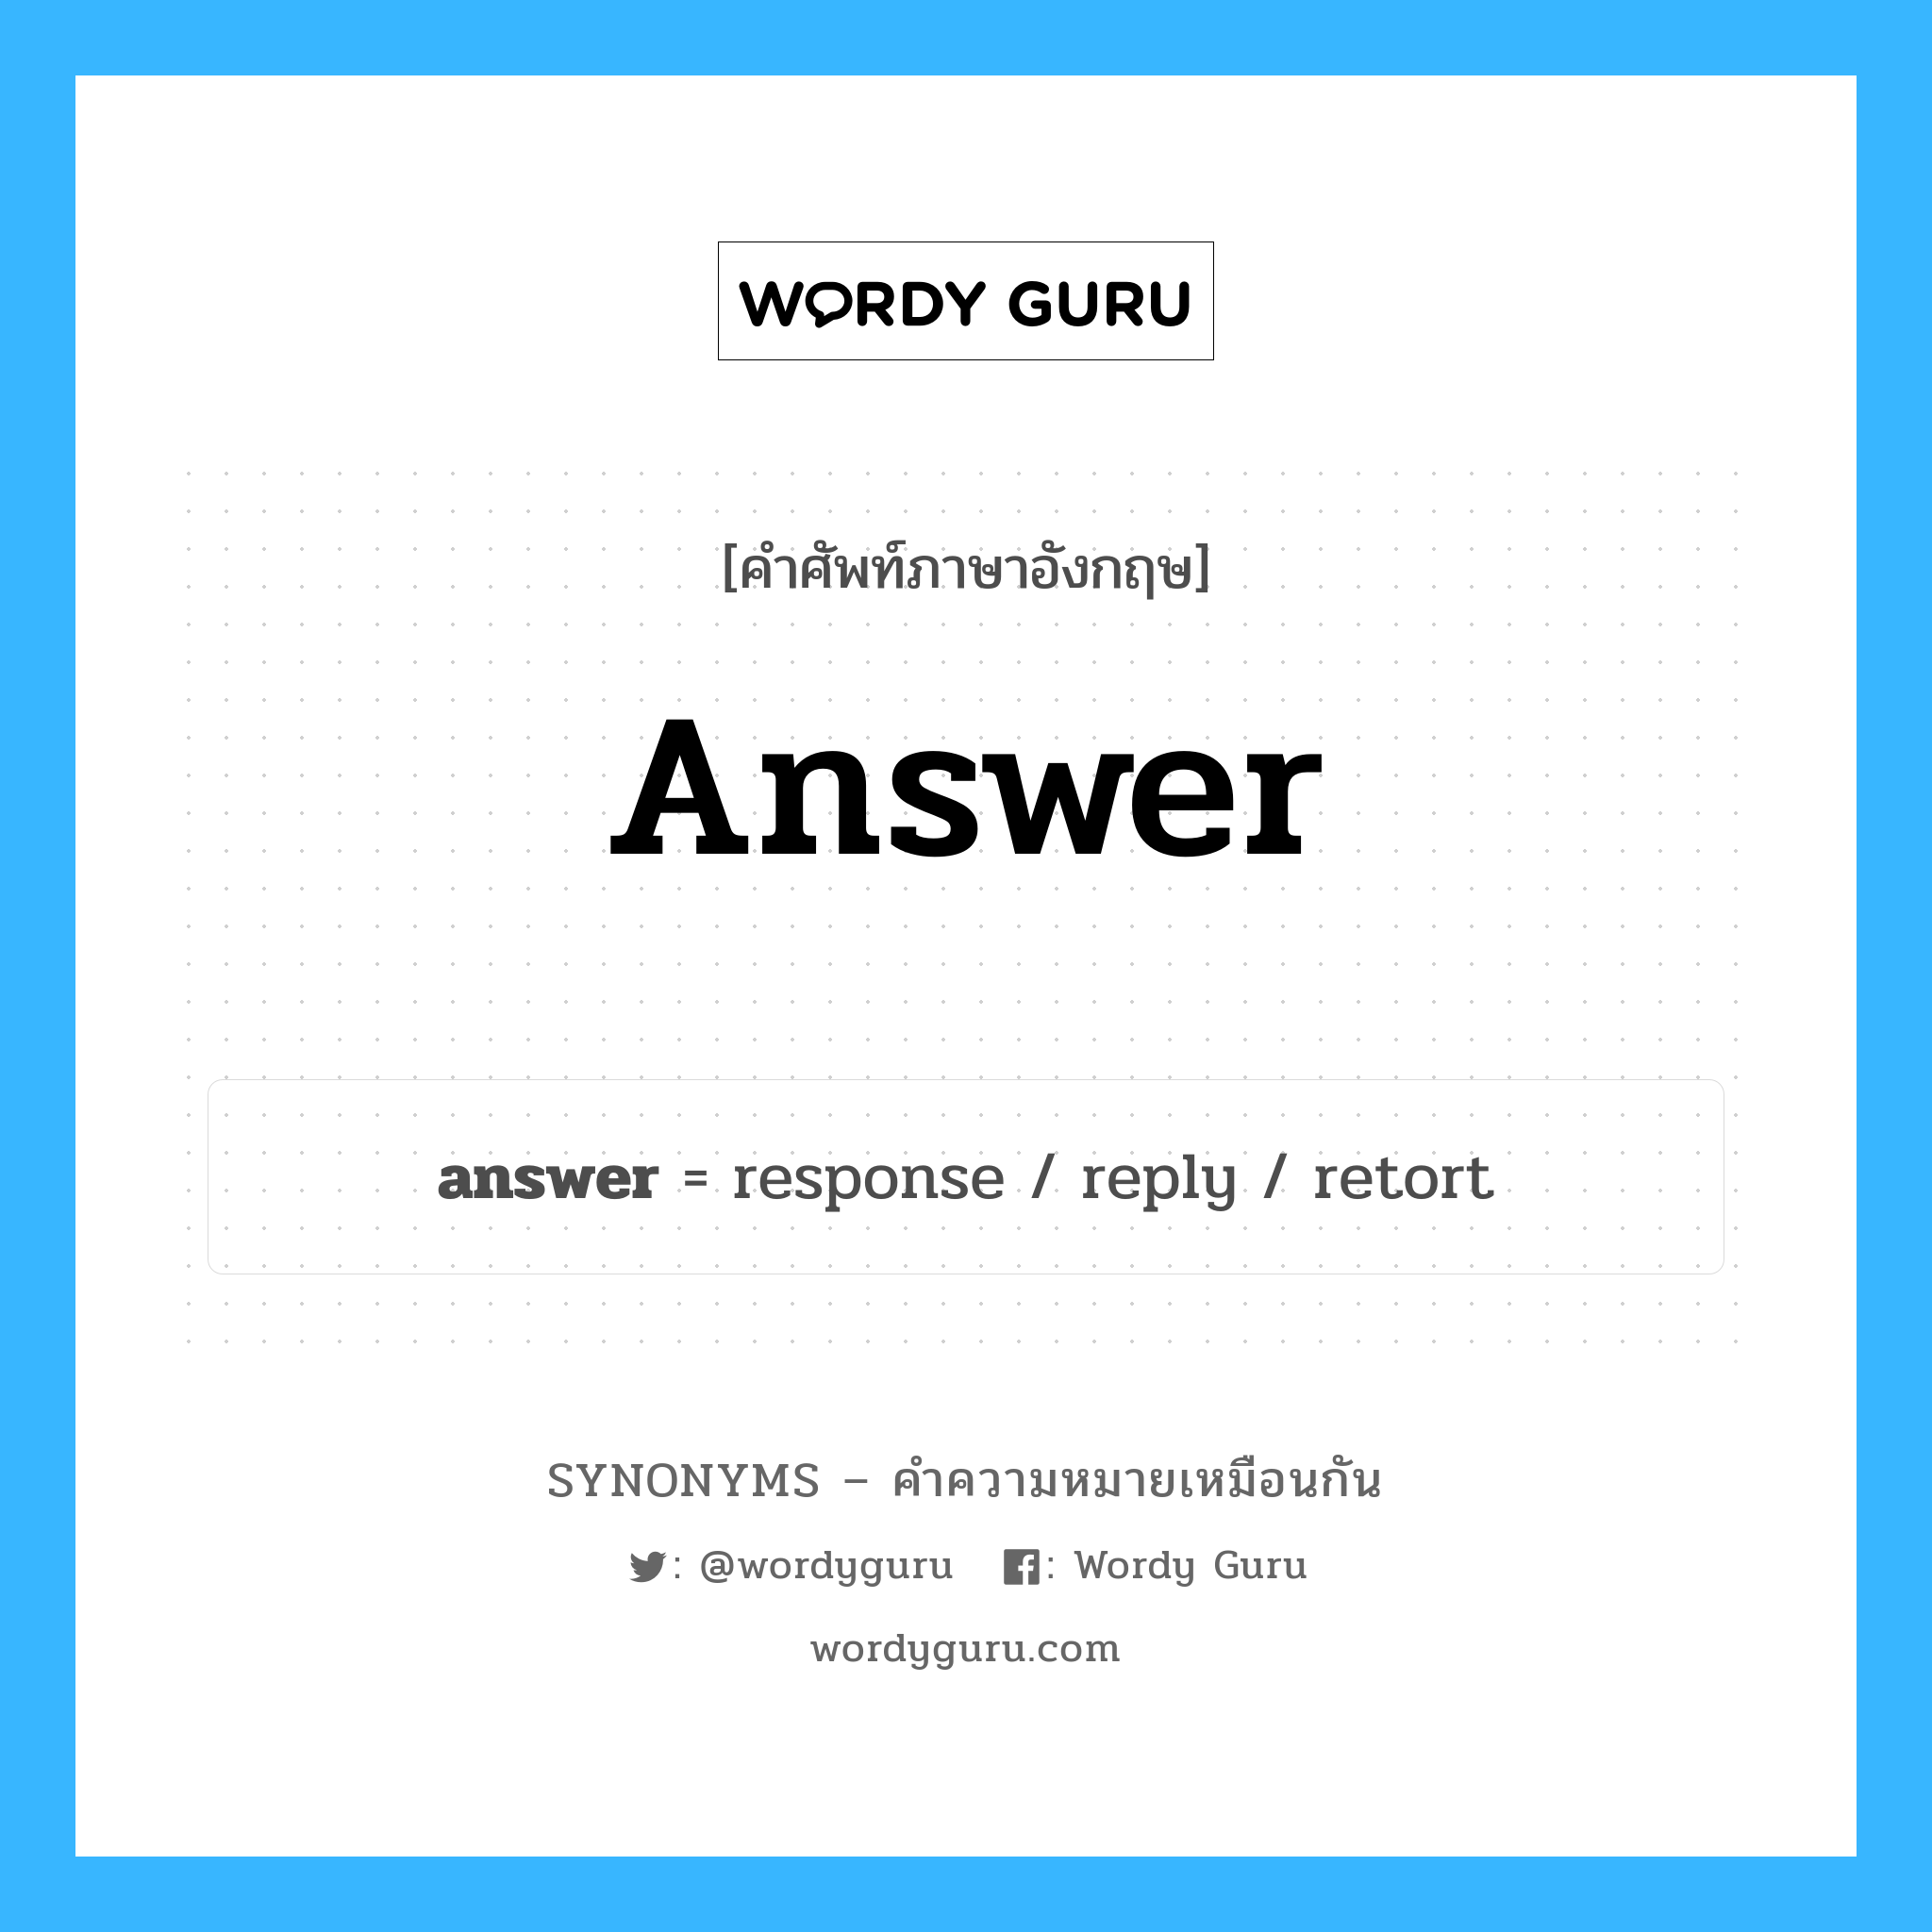 reply เป็นหนึ่งใน answer และมีคำอื่น ๆ อีกดังนี้, คำศัพท์ภาษาอังกฤษ reply ความหมายคล้ายกันกับ answer แปลว่า ตอบ หมวด answer